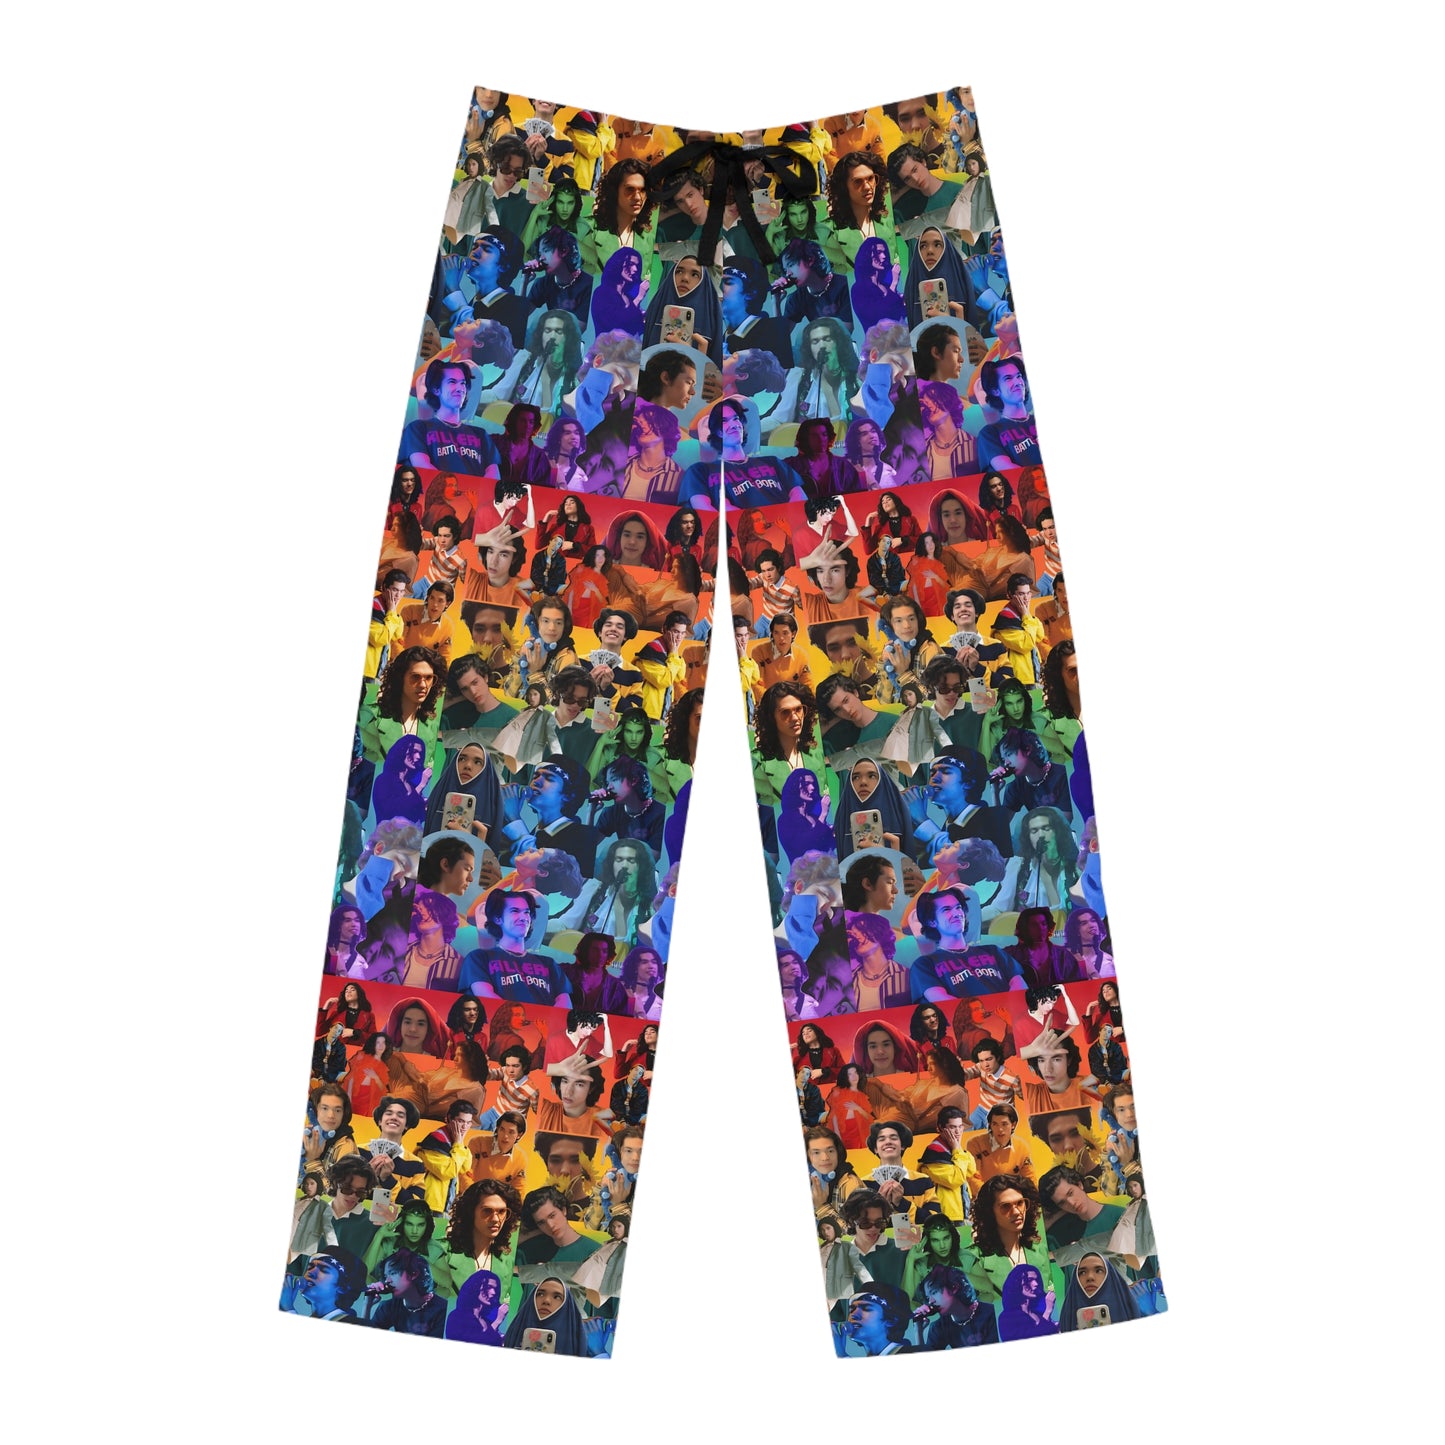 Conan Grey Rainbow Photo Collage Men's Pajama Pants